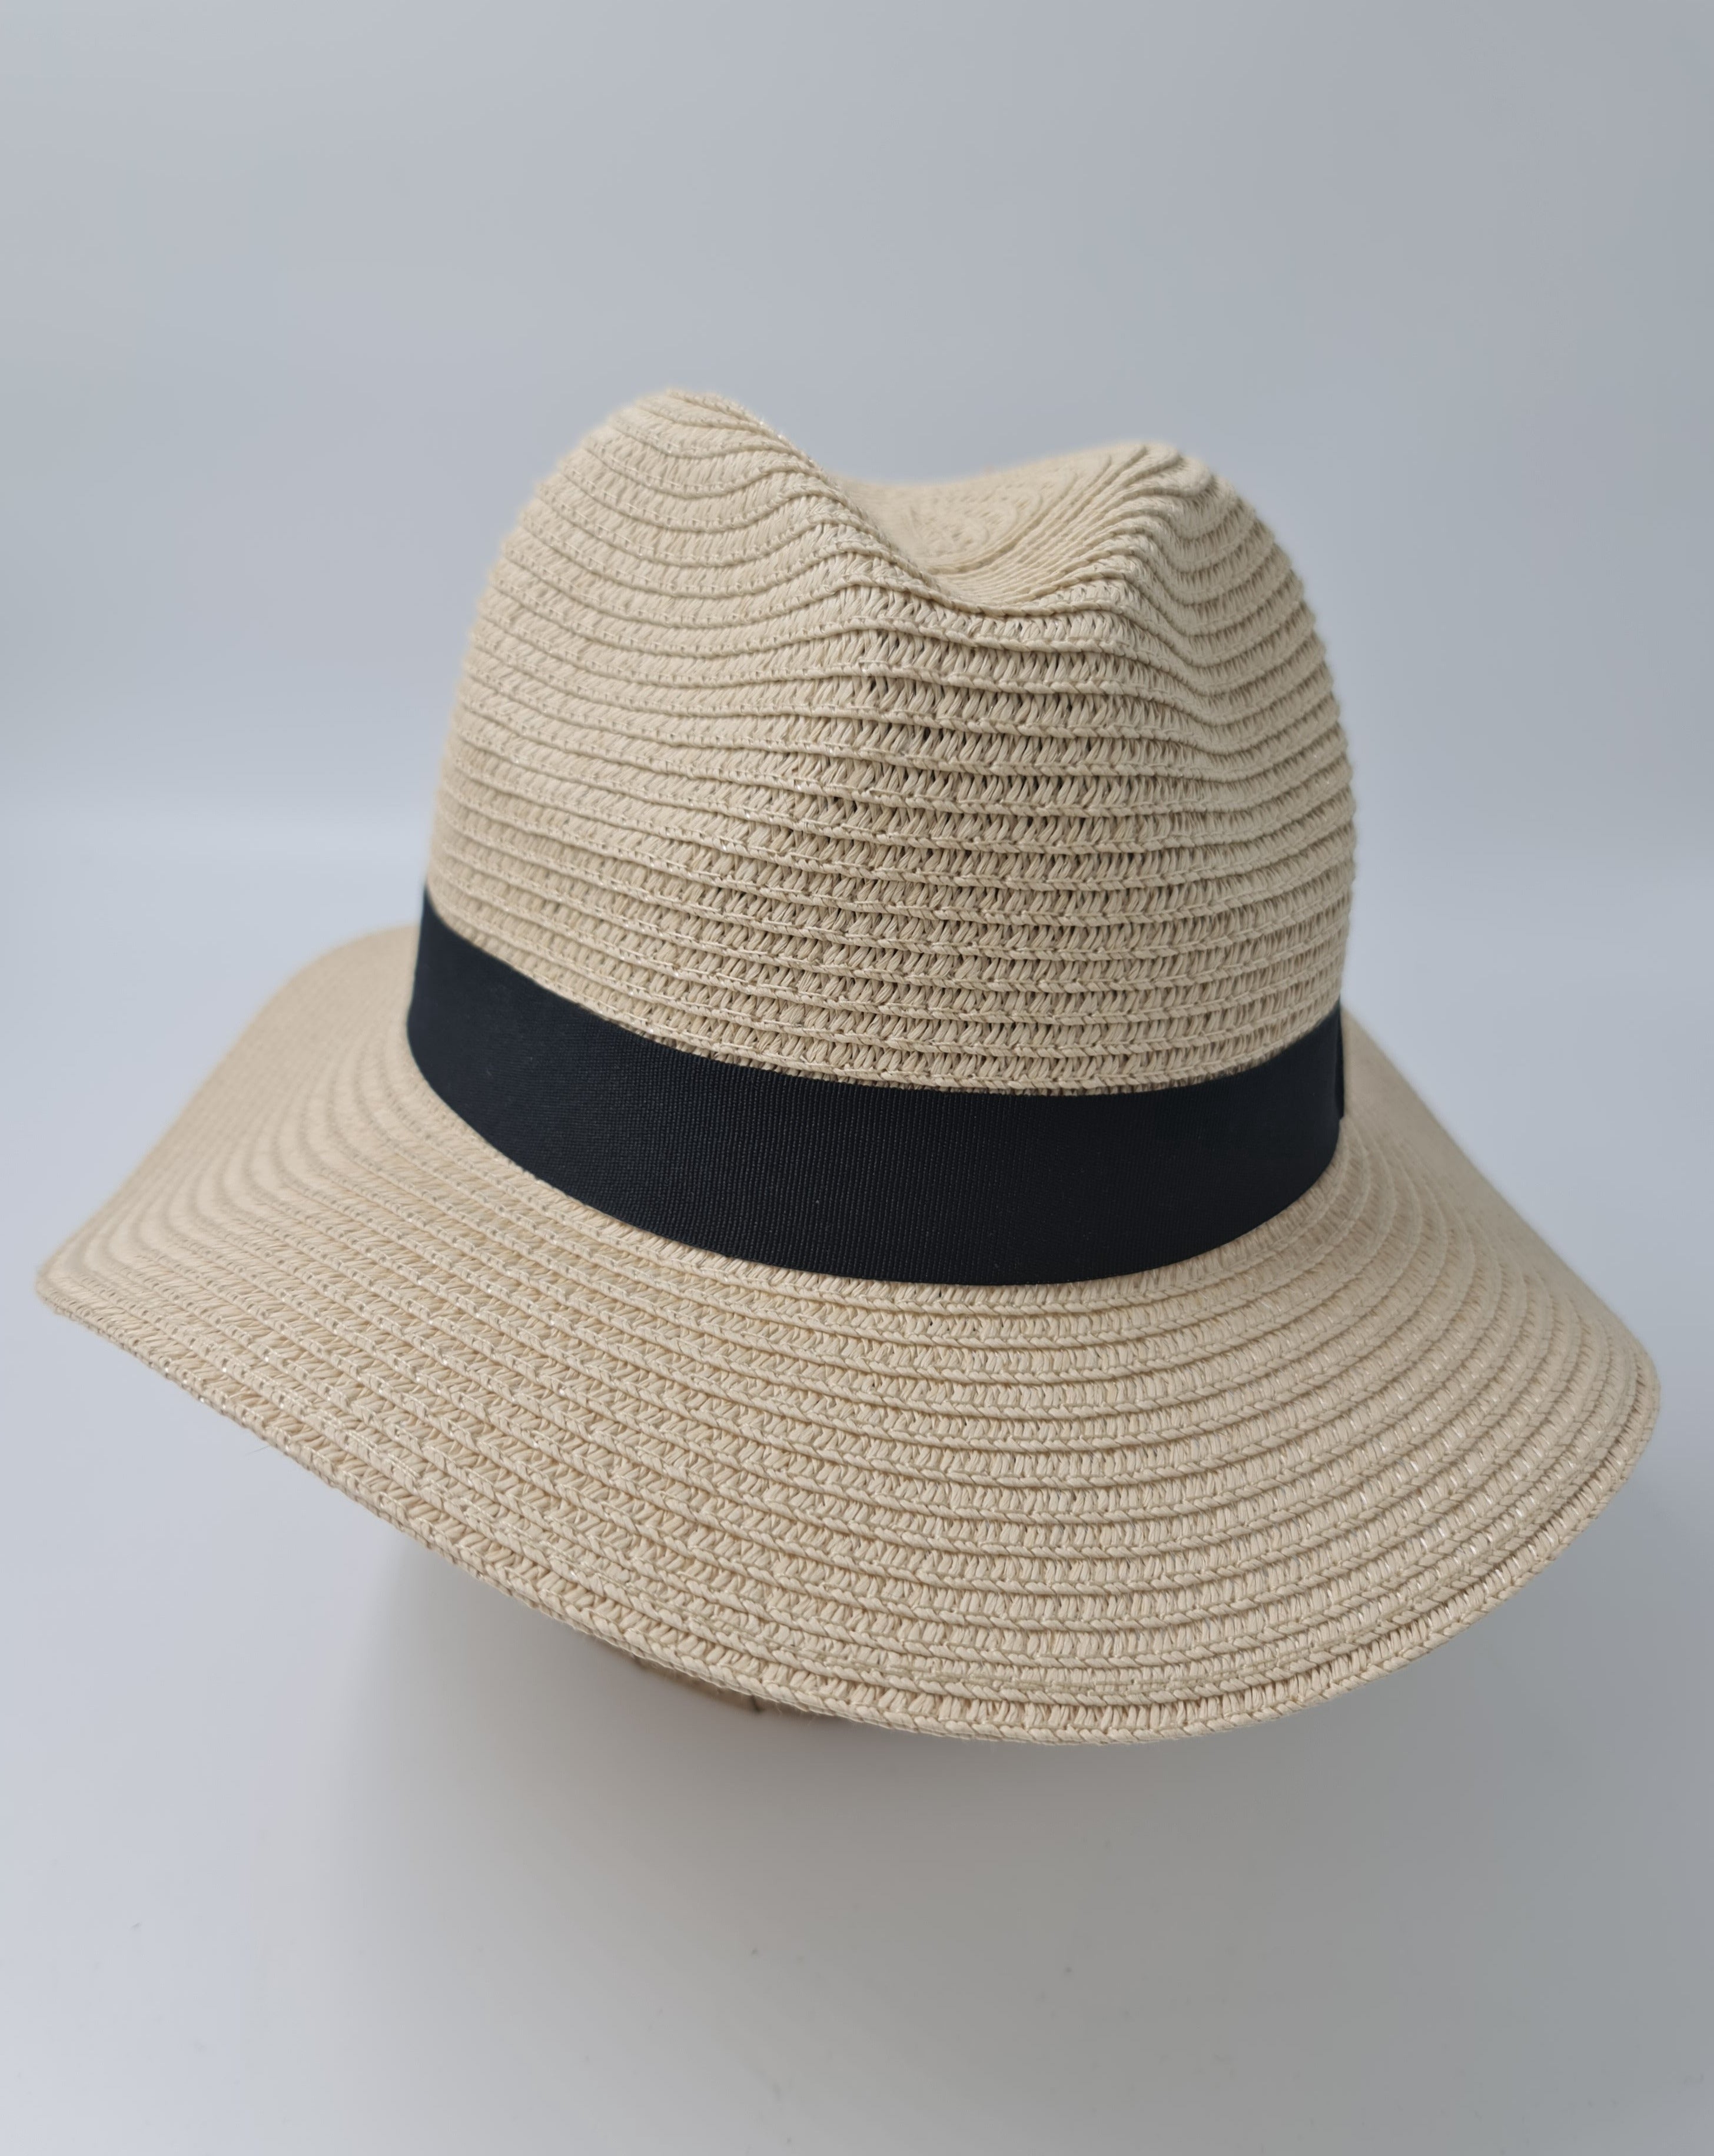 Free Spirit Classic Panama Summer Hat-Natural